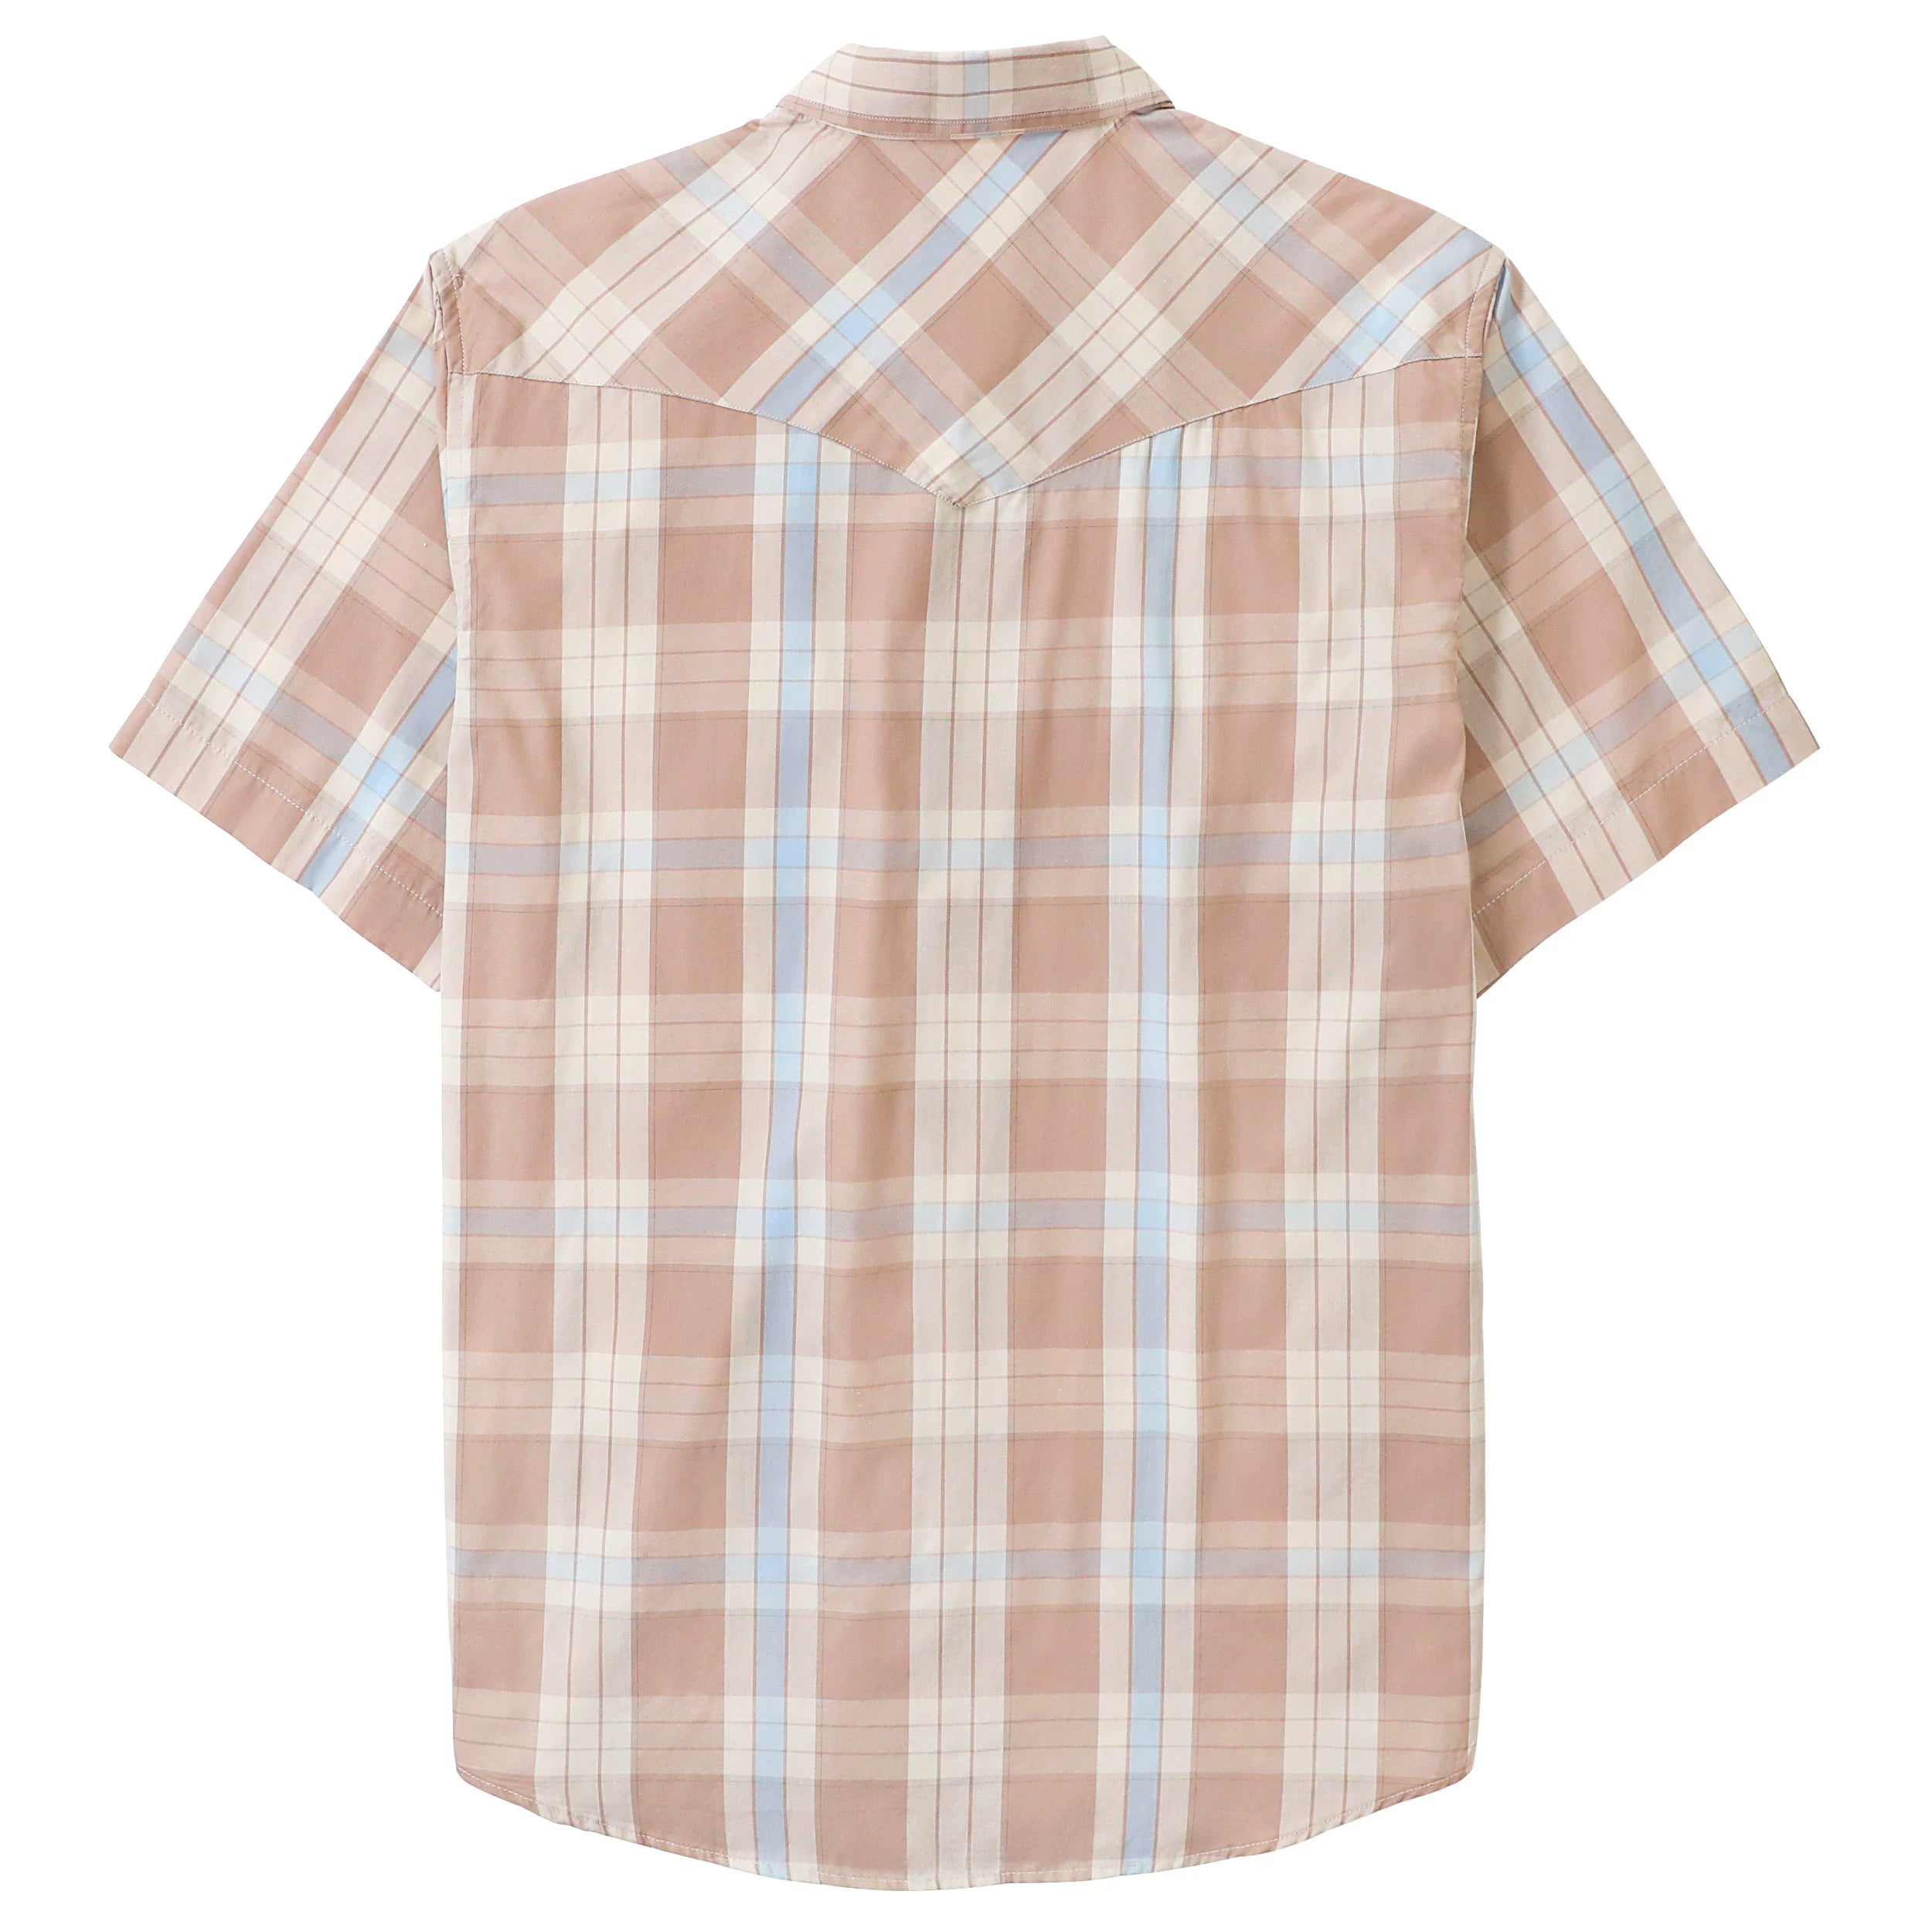 Dubinik® Western Shirts for Men Short Sleeve Plaid Pearl Snap Shirts for Men Button Up Shirt Cowboy Casual Work Shirt#41029